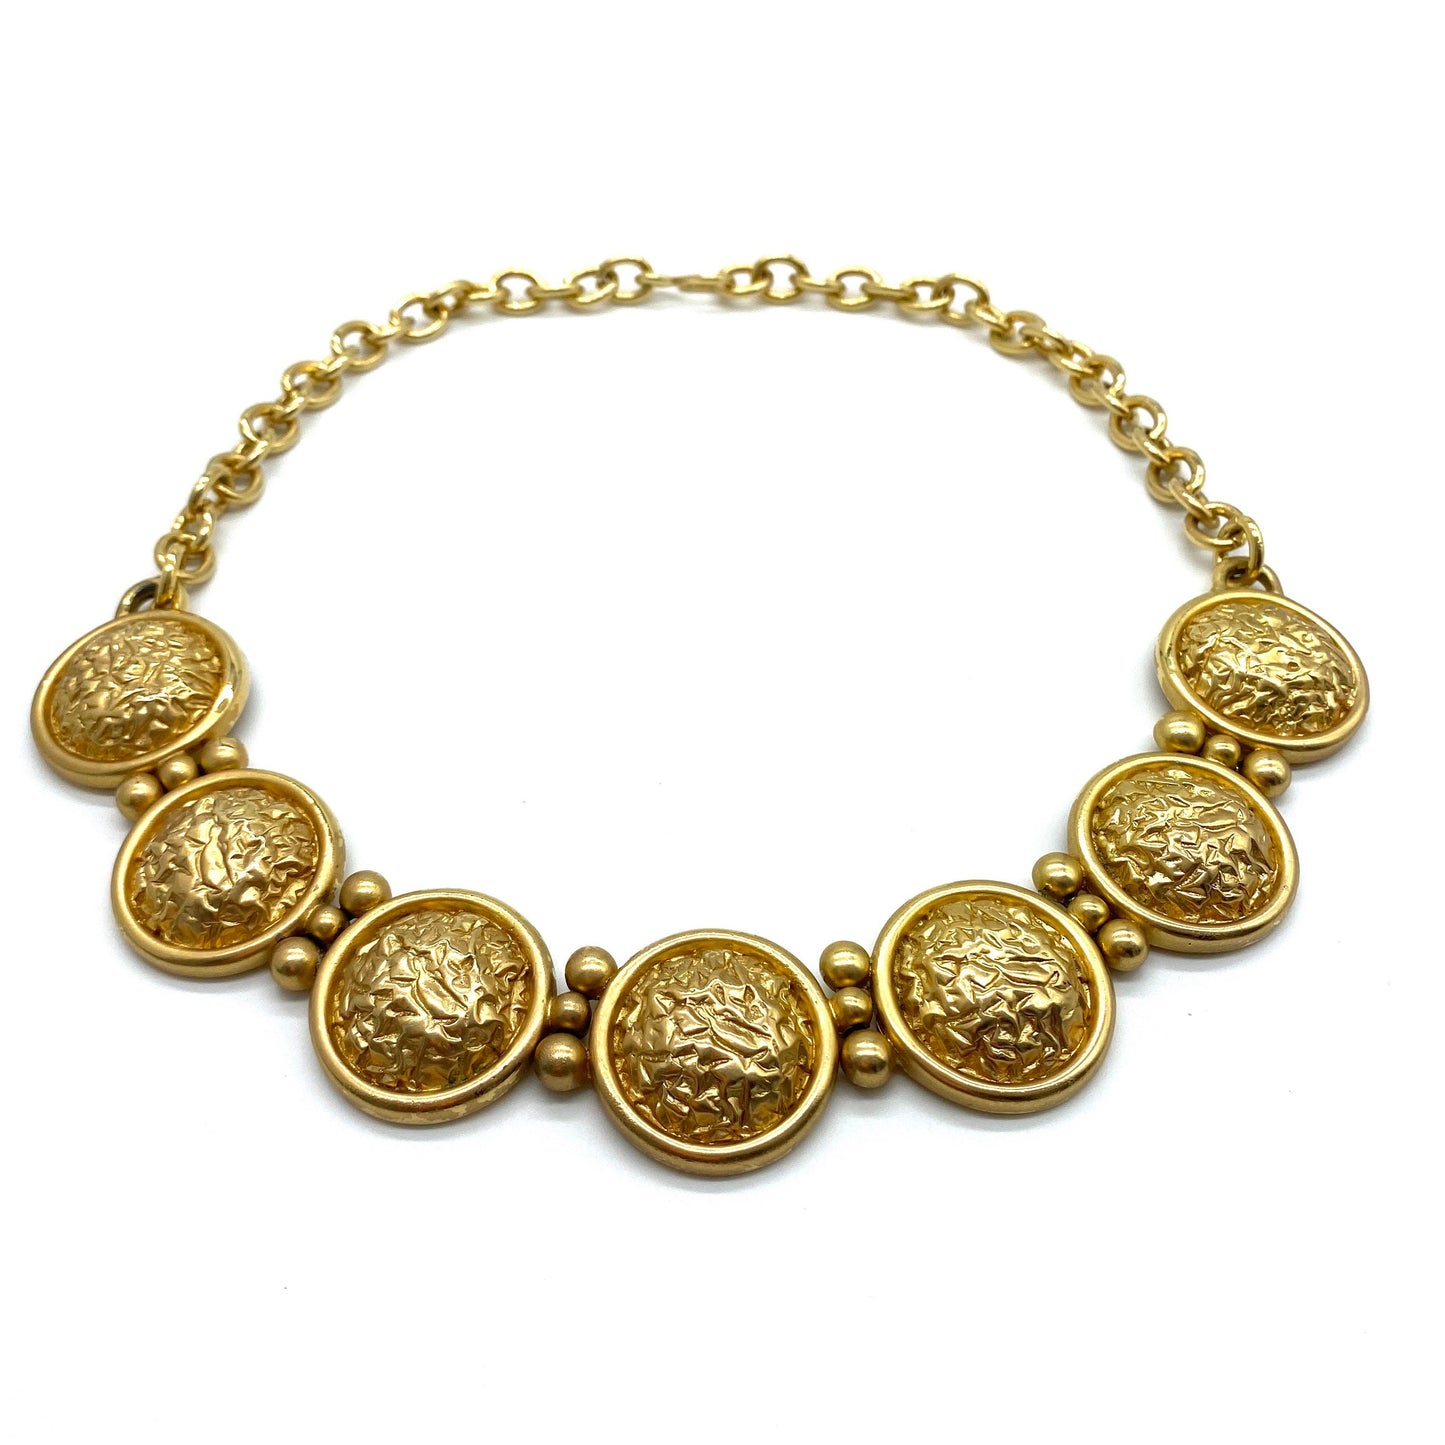 Joan Collins Signed Etruscan Revival Necklace